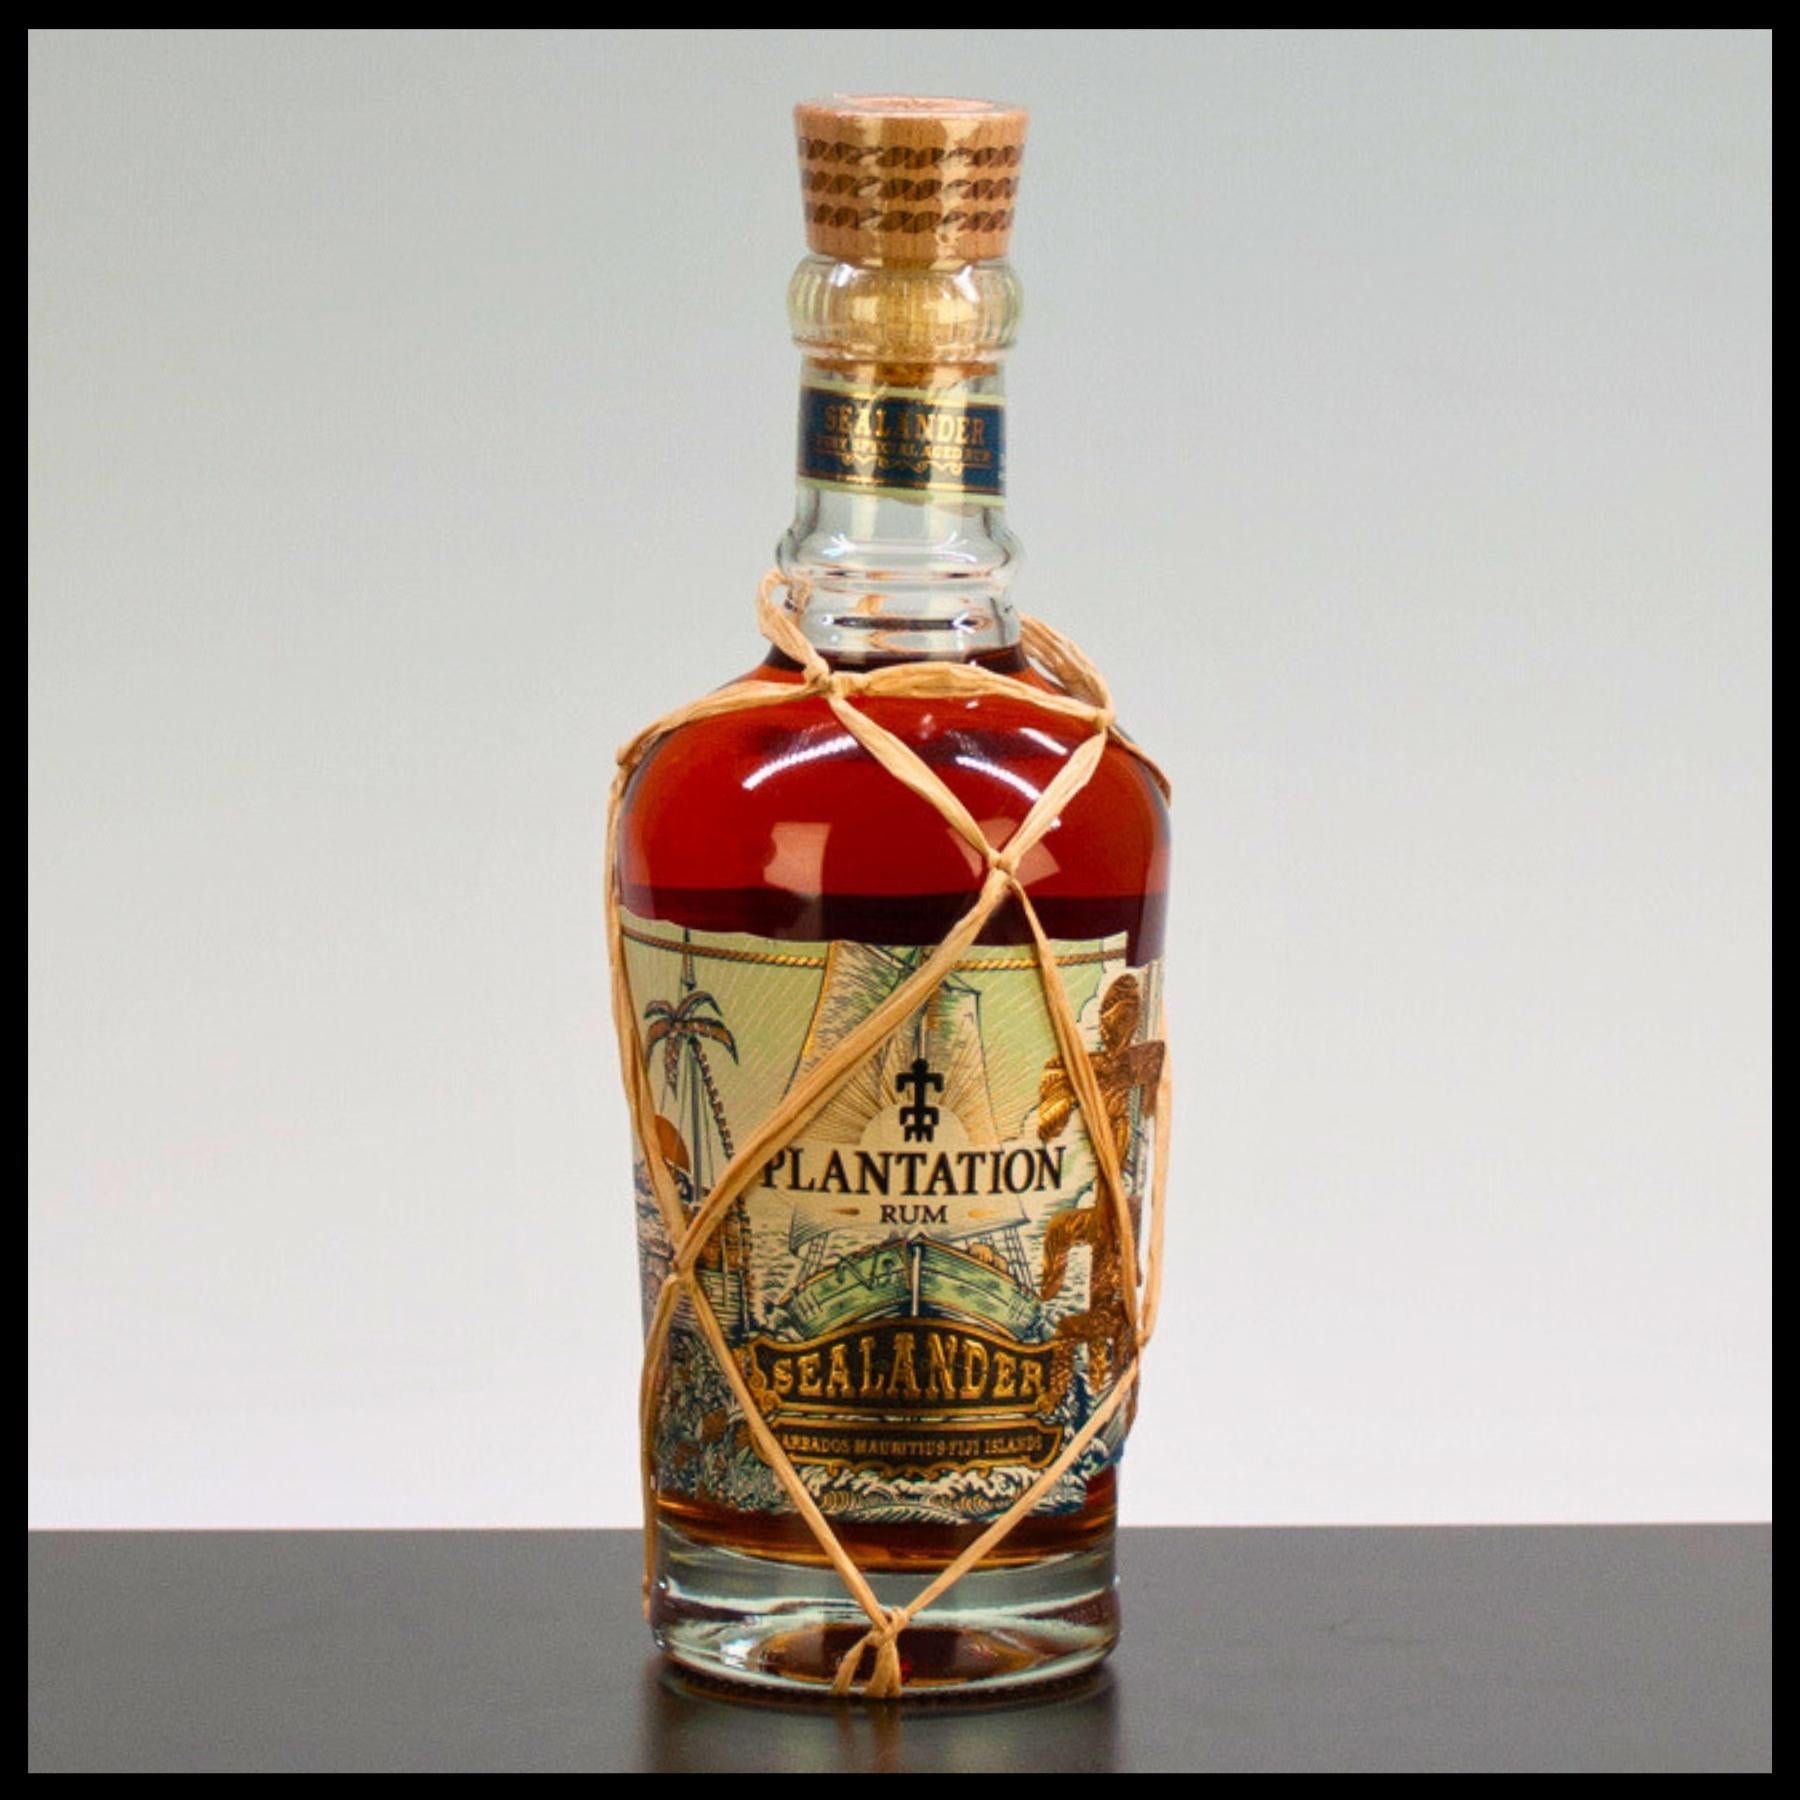 Plantation Sealander Rum 0,7L - 40% Vol.